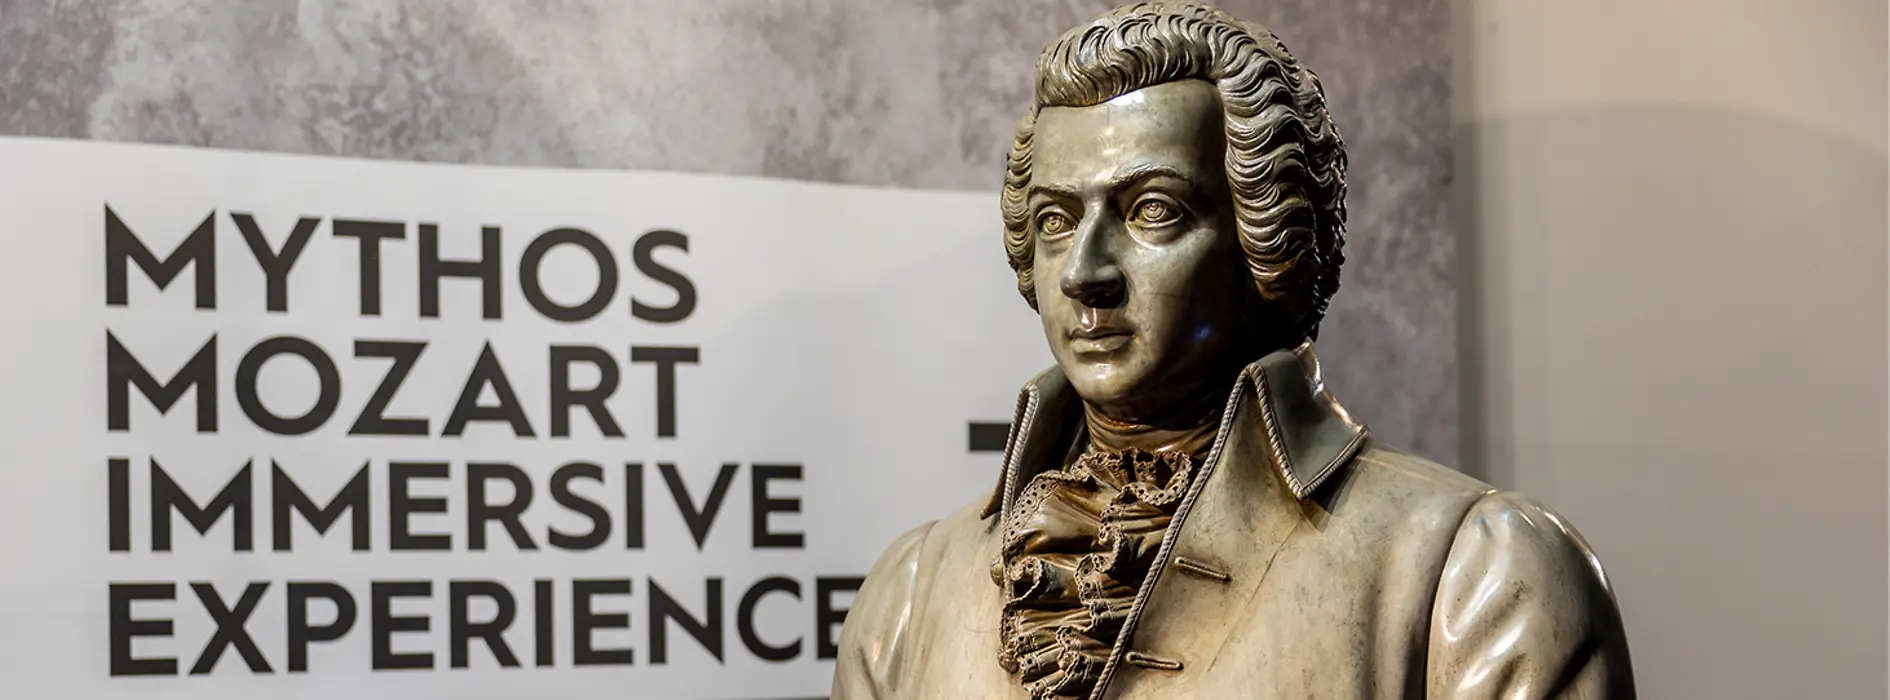 Mythos Mozart - buste